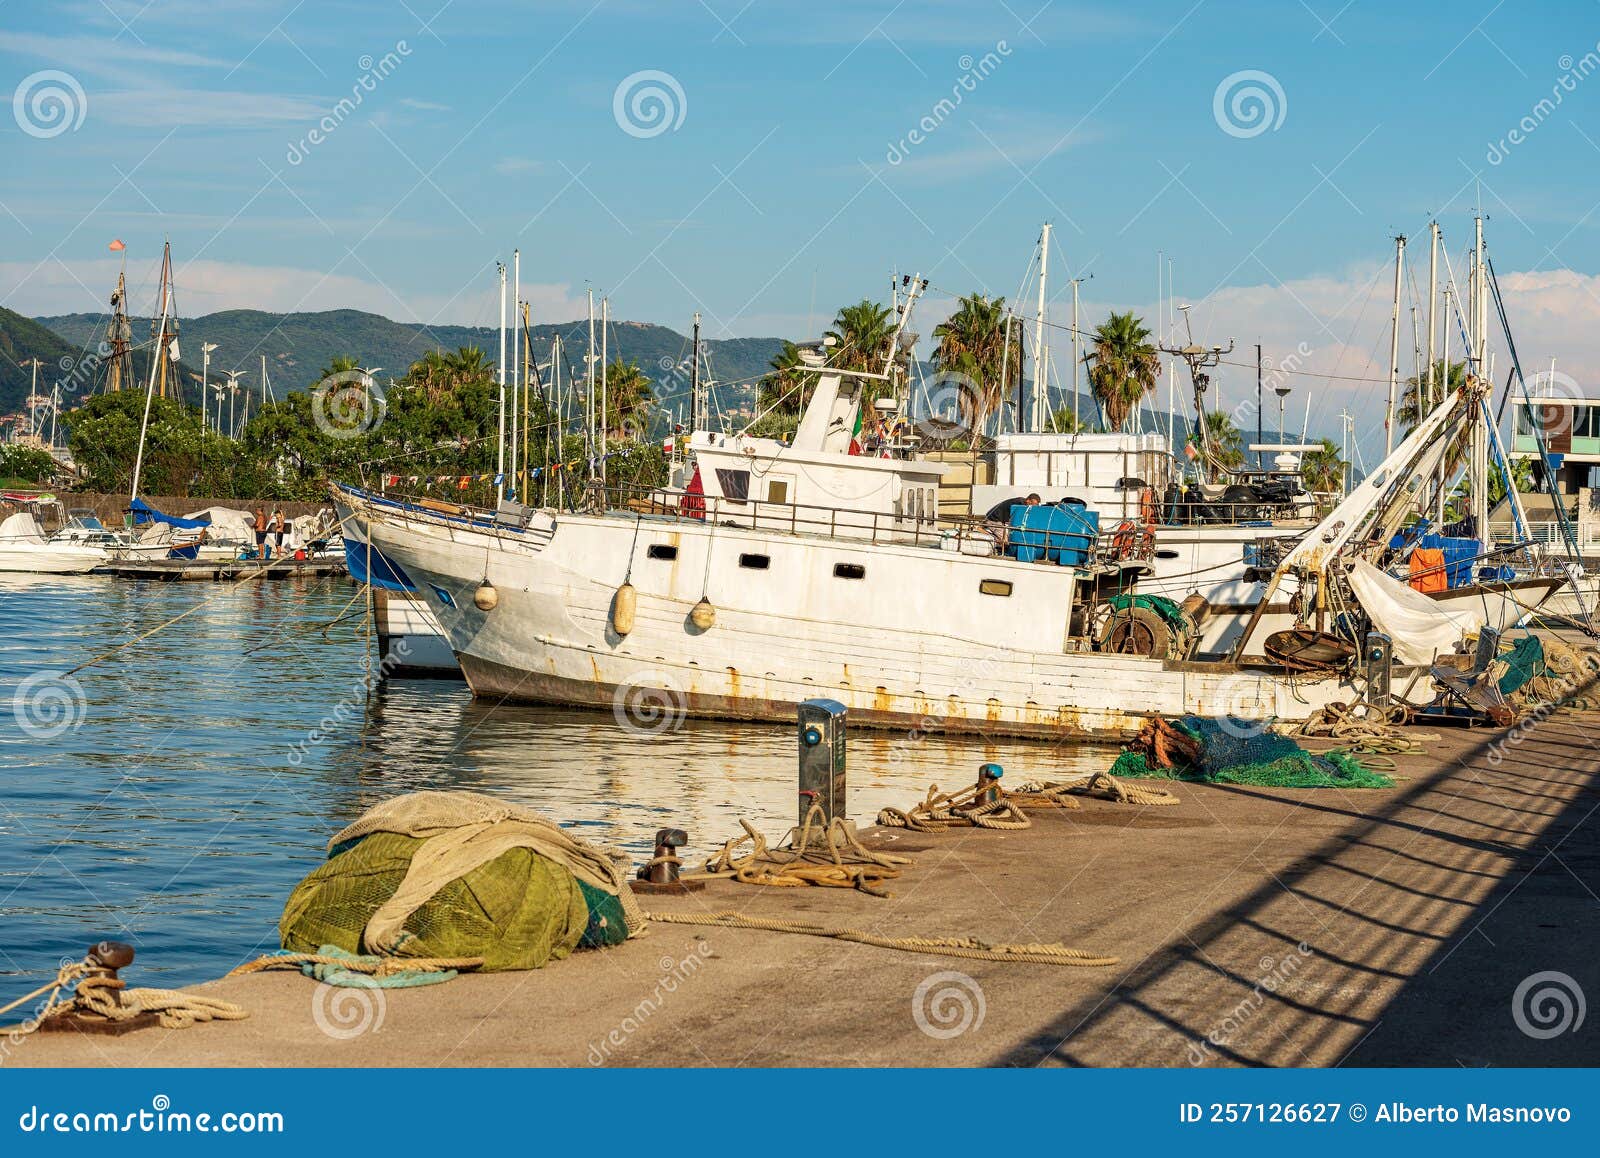 https://thumbs.dreamstime.com/z/fishing-boats-used-trawling-trawler-quayside-nets-ropes-moorage-bollards-port-la-spezia-town-gulf-la-spezia-257126627.jpg